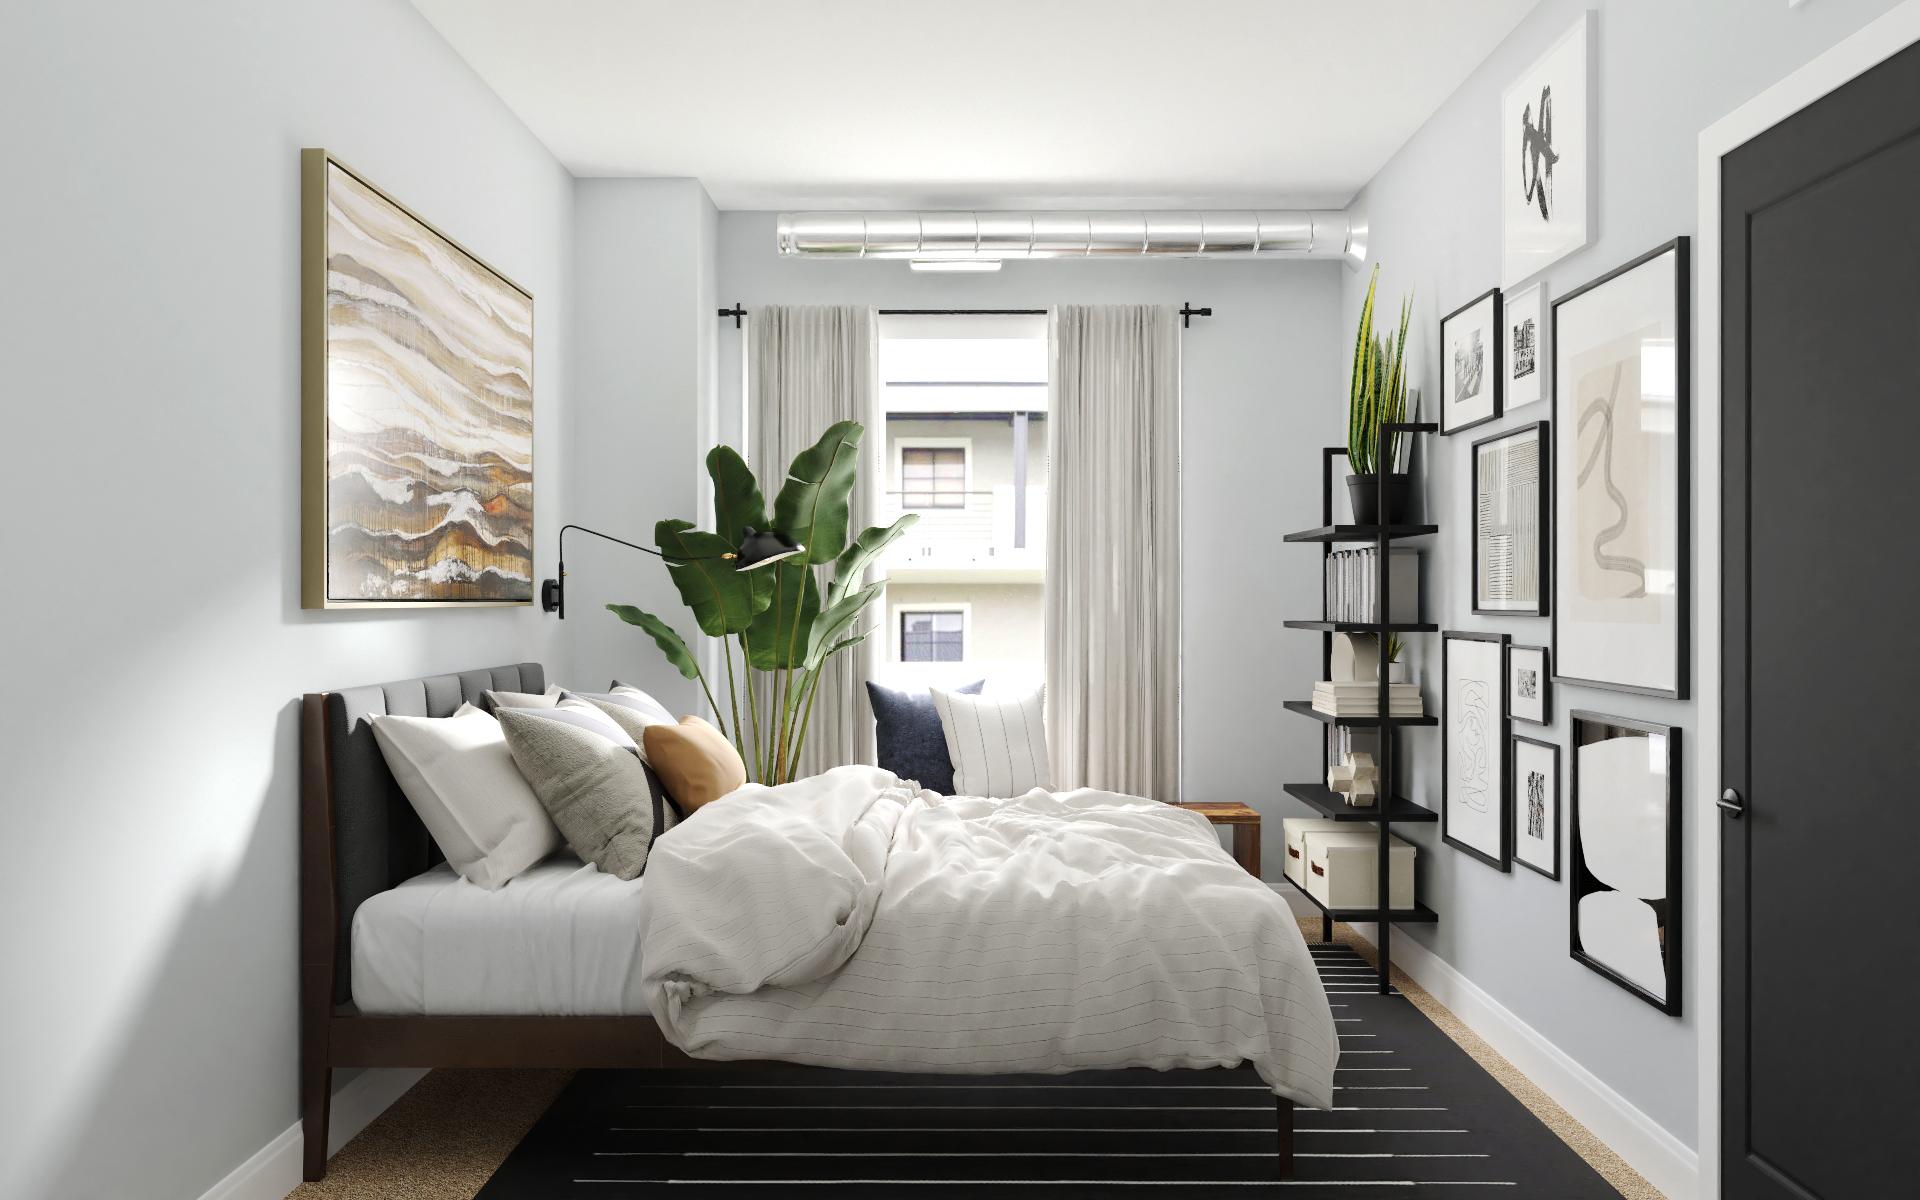 Cozy & Monochromatic: Mid-Century Bedroom With Industrial Decor